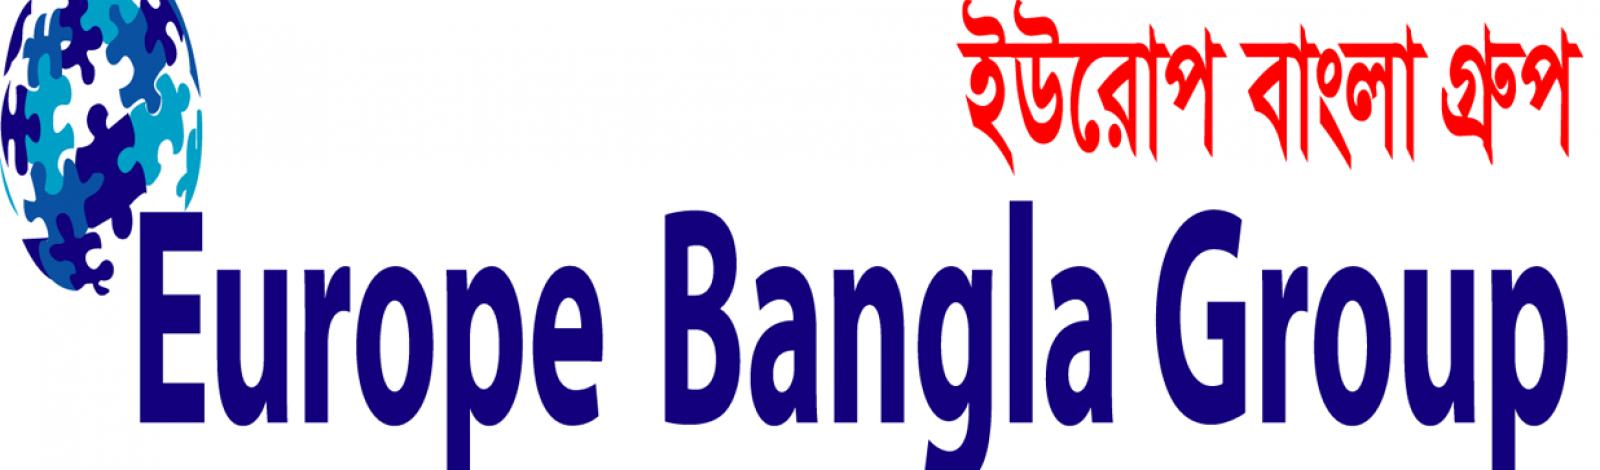 Europe Bangla Group banner